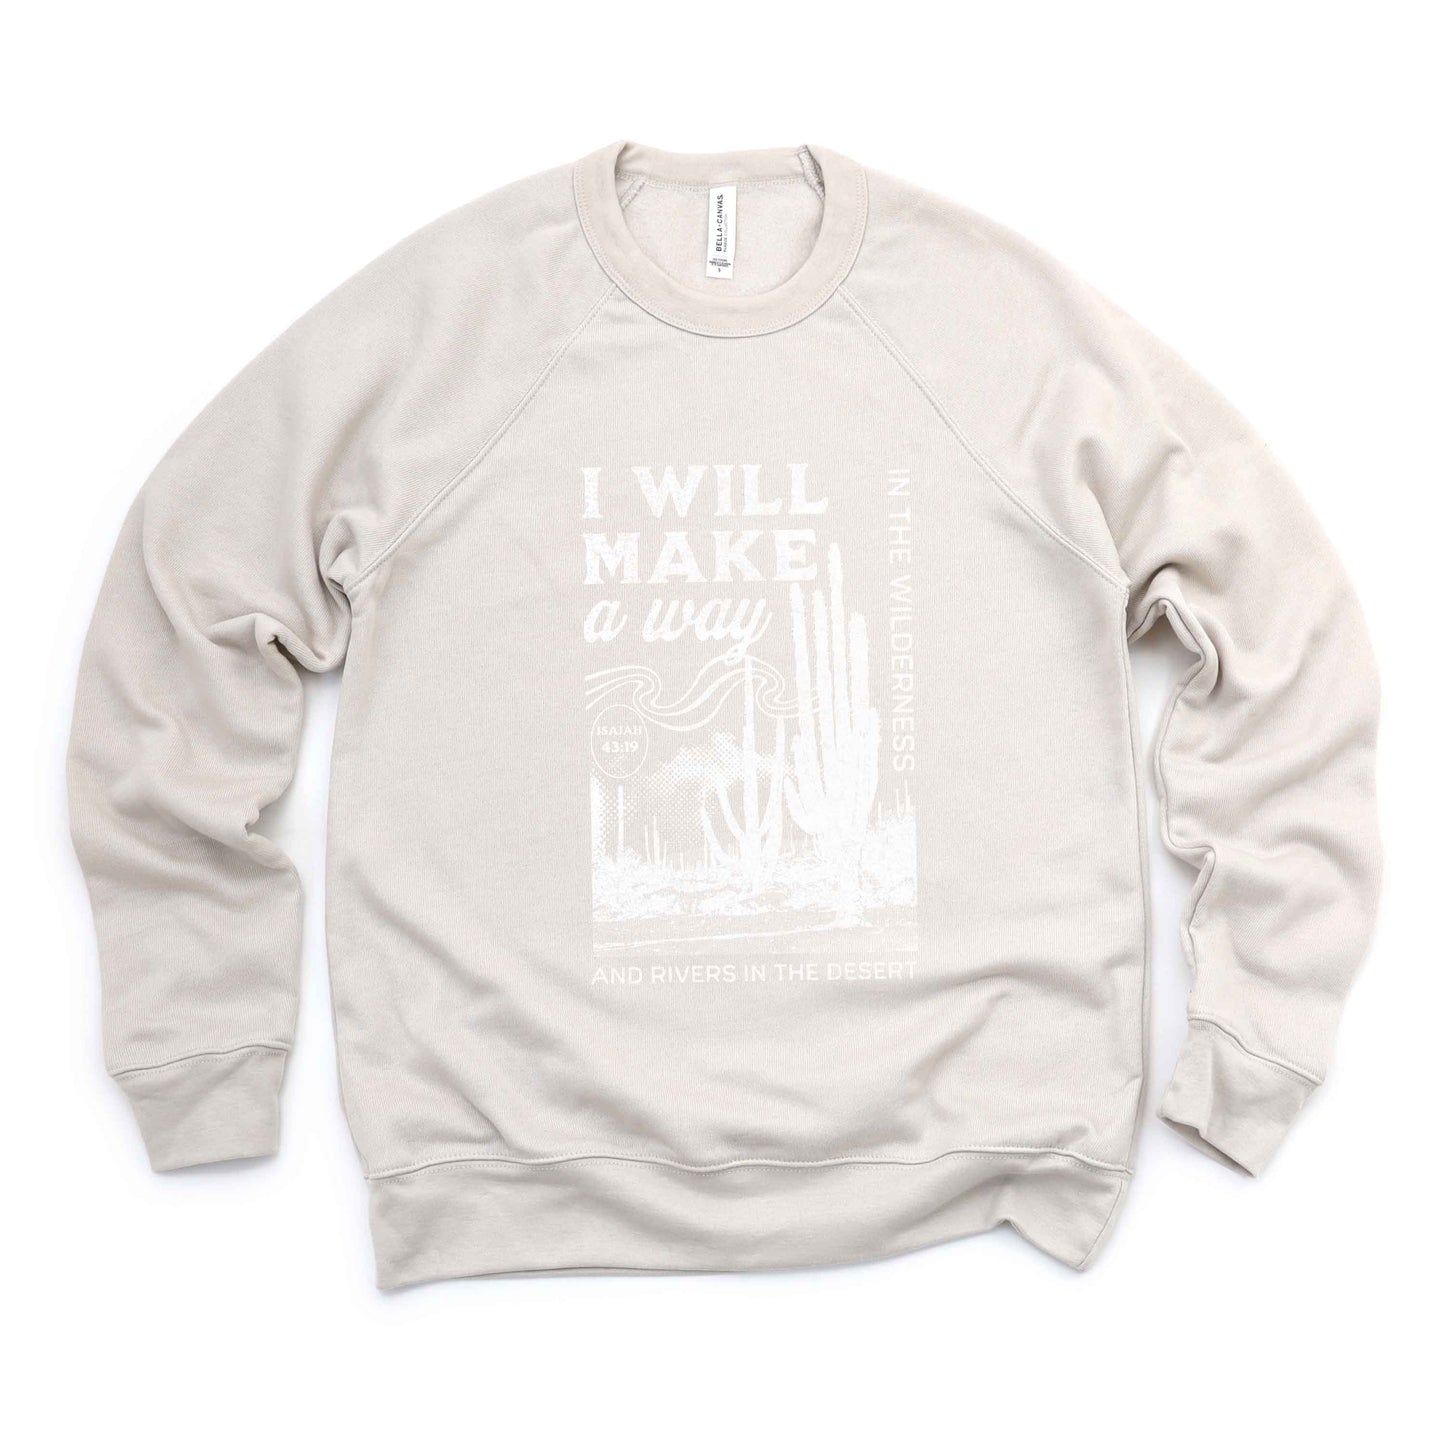 I Will Make A Way | Bella Canvas Premium Sweatshirt